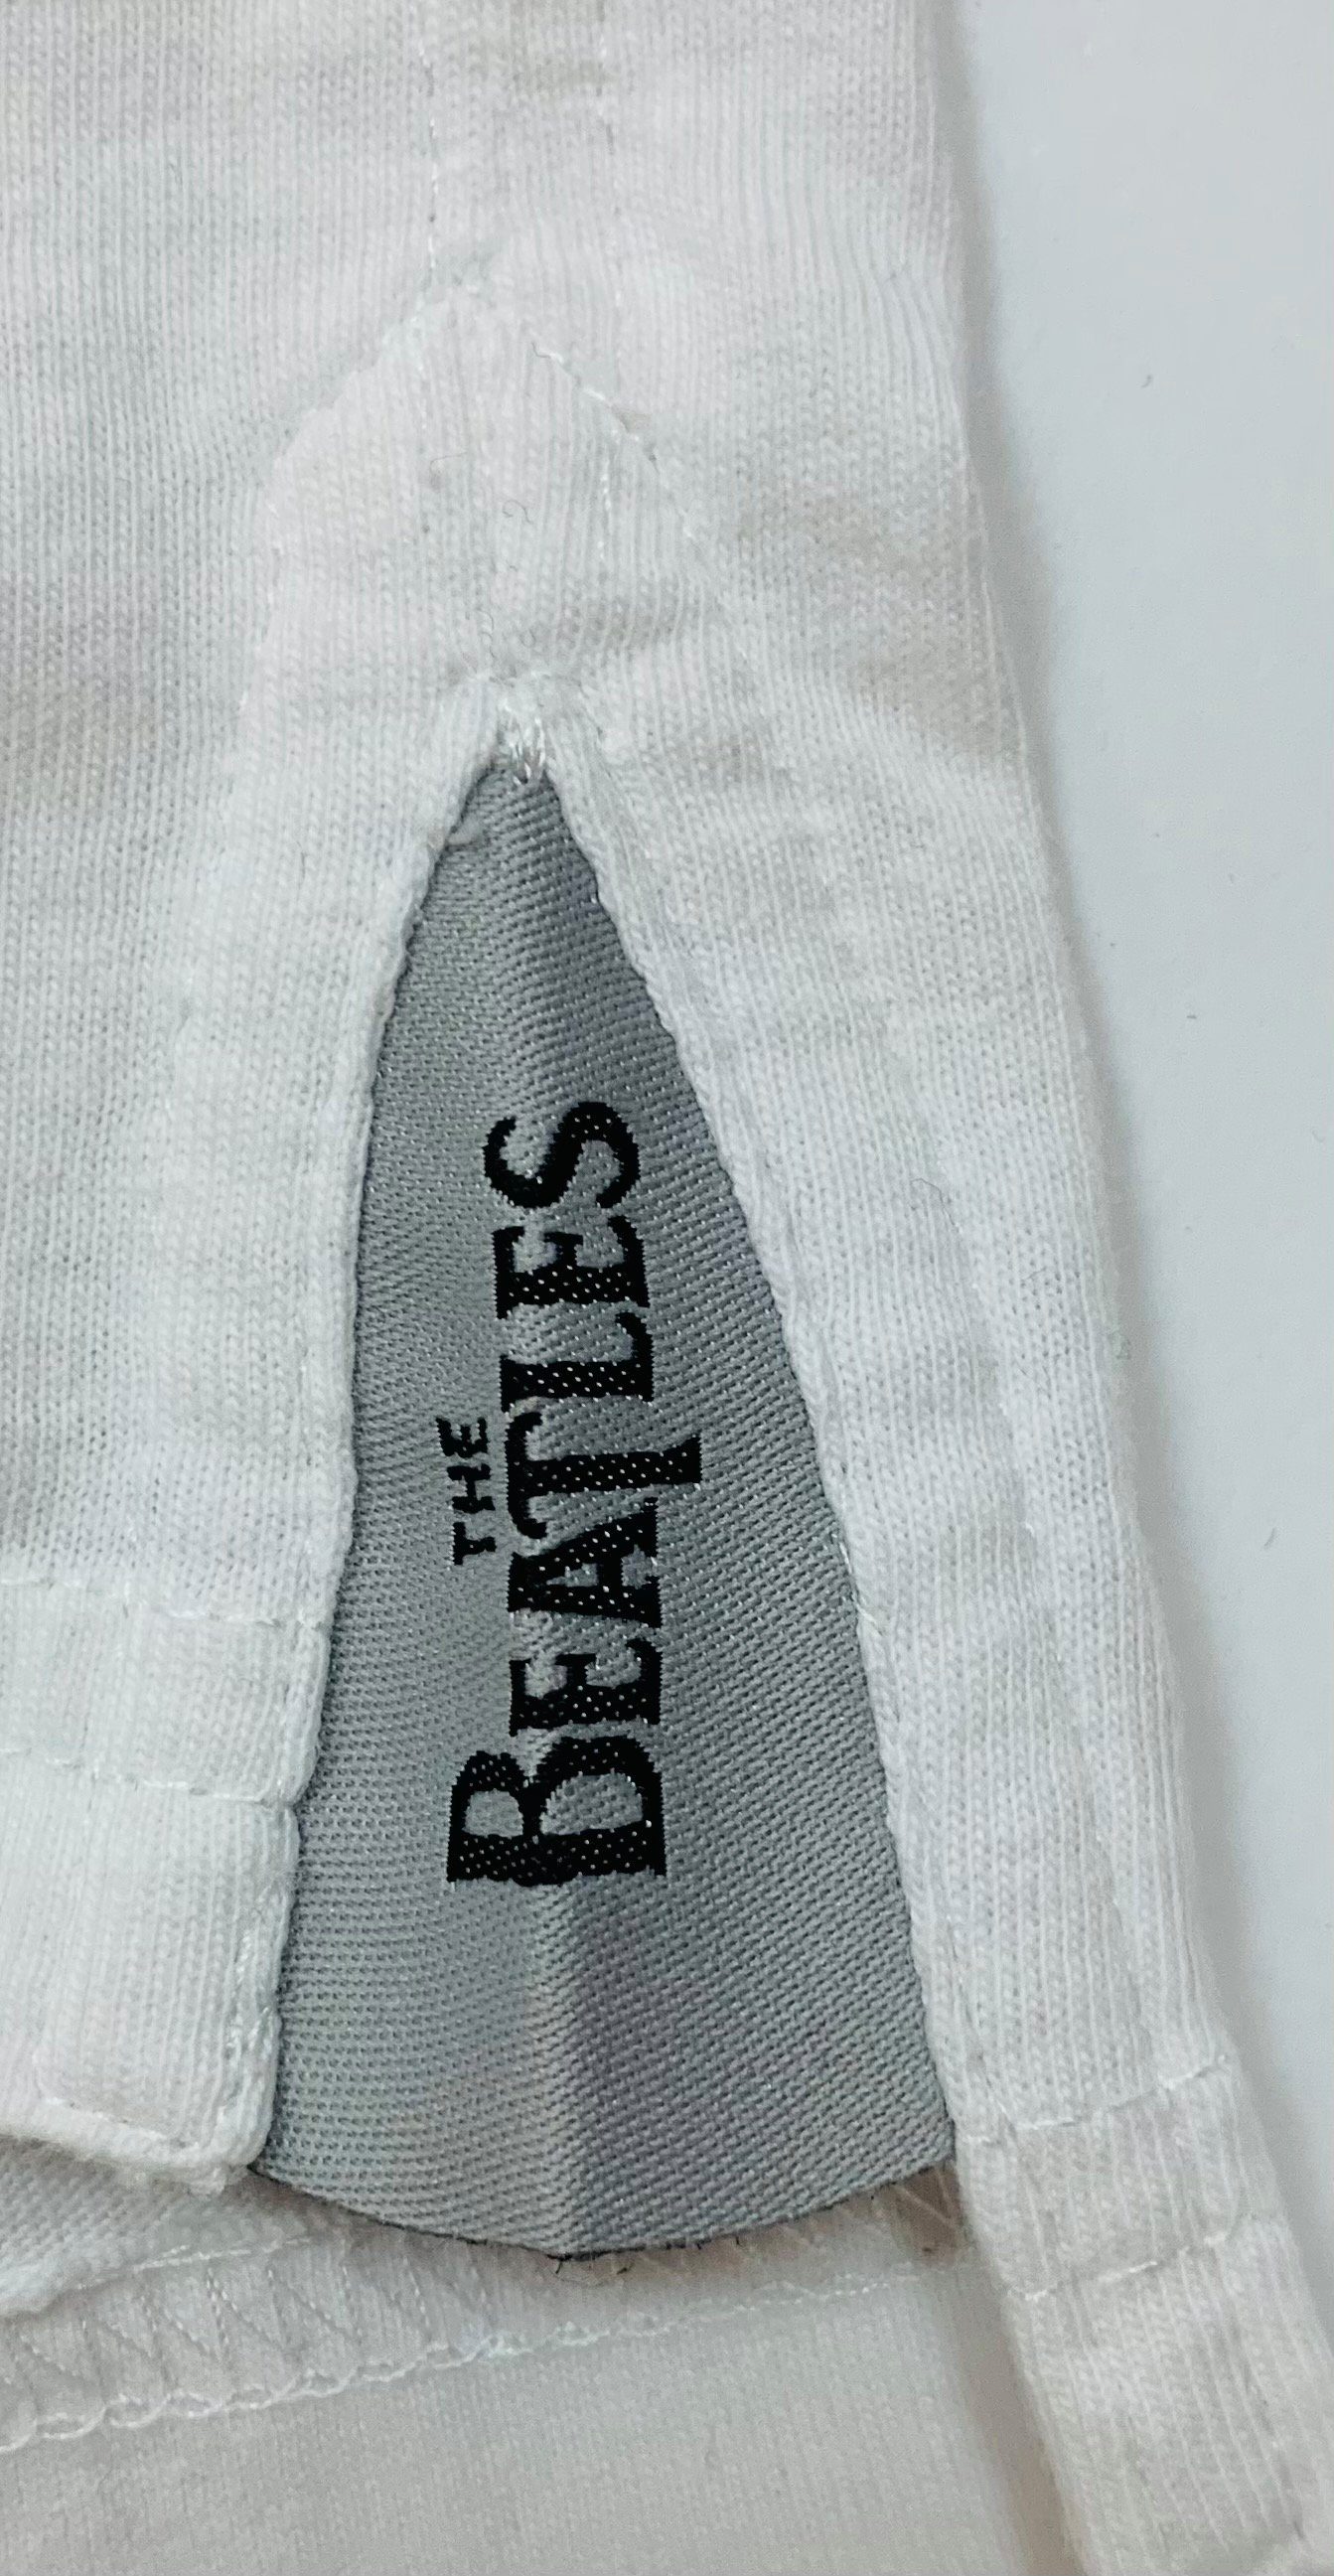 The Beatles Frontprint (Stück, 1-tlg., T-Shirt "Classic Logo" Stück) mit